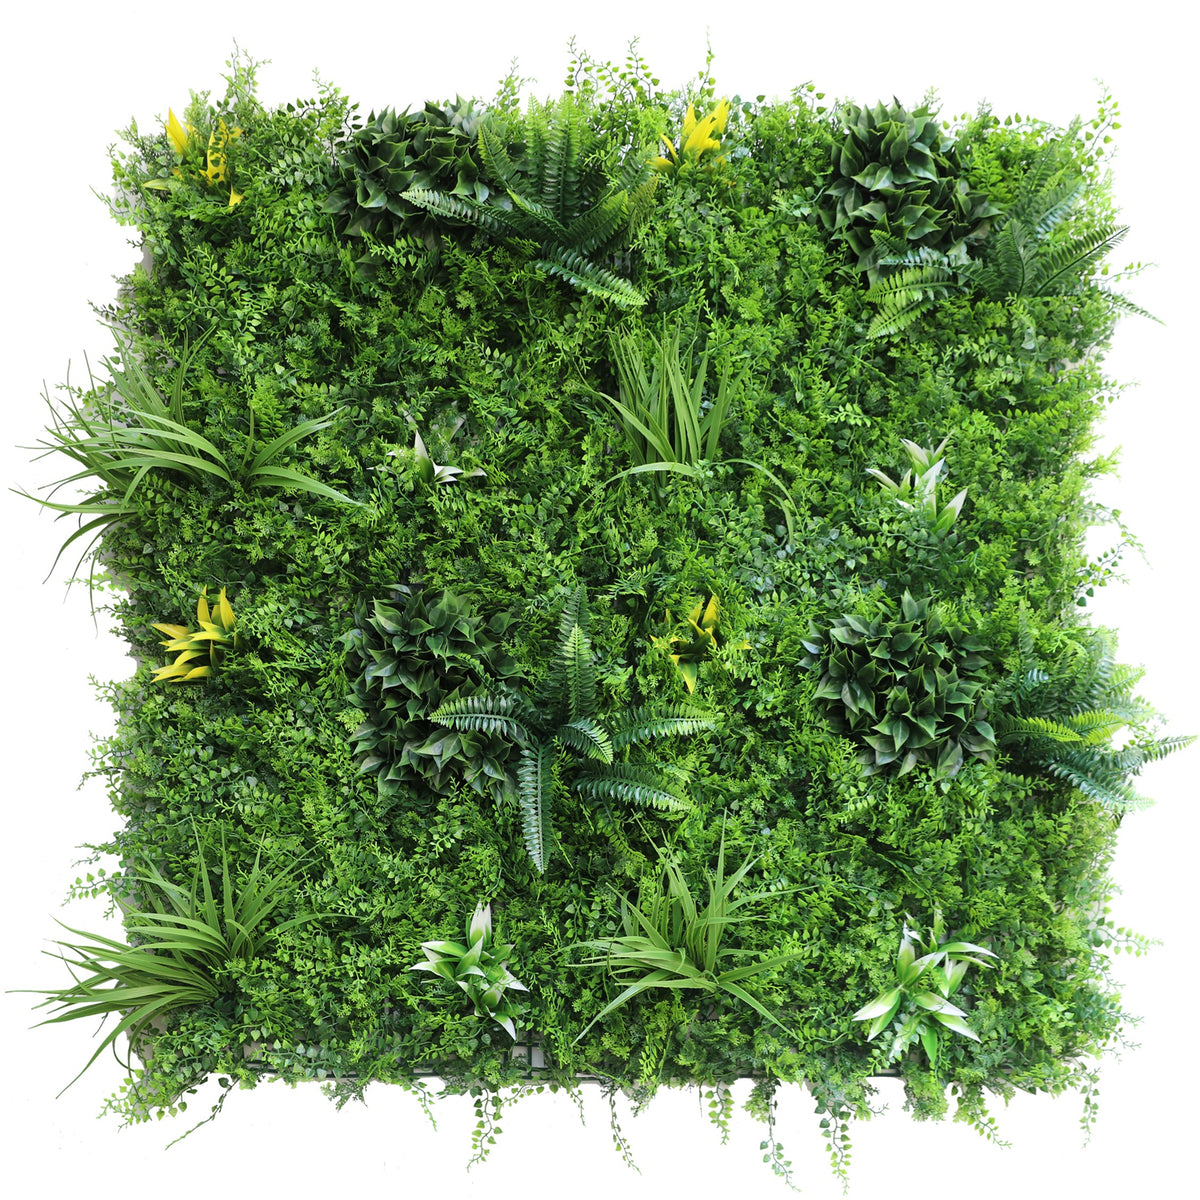 Artificial Vertical Wall Grass in Green Set - 5 Pieces - Notbrand